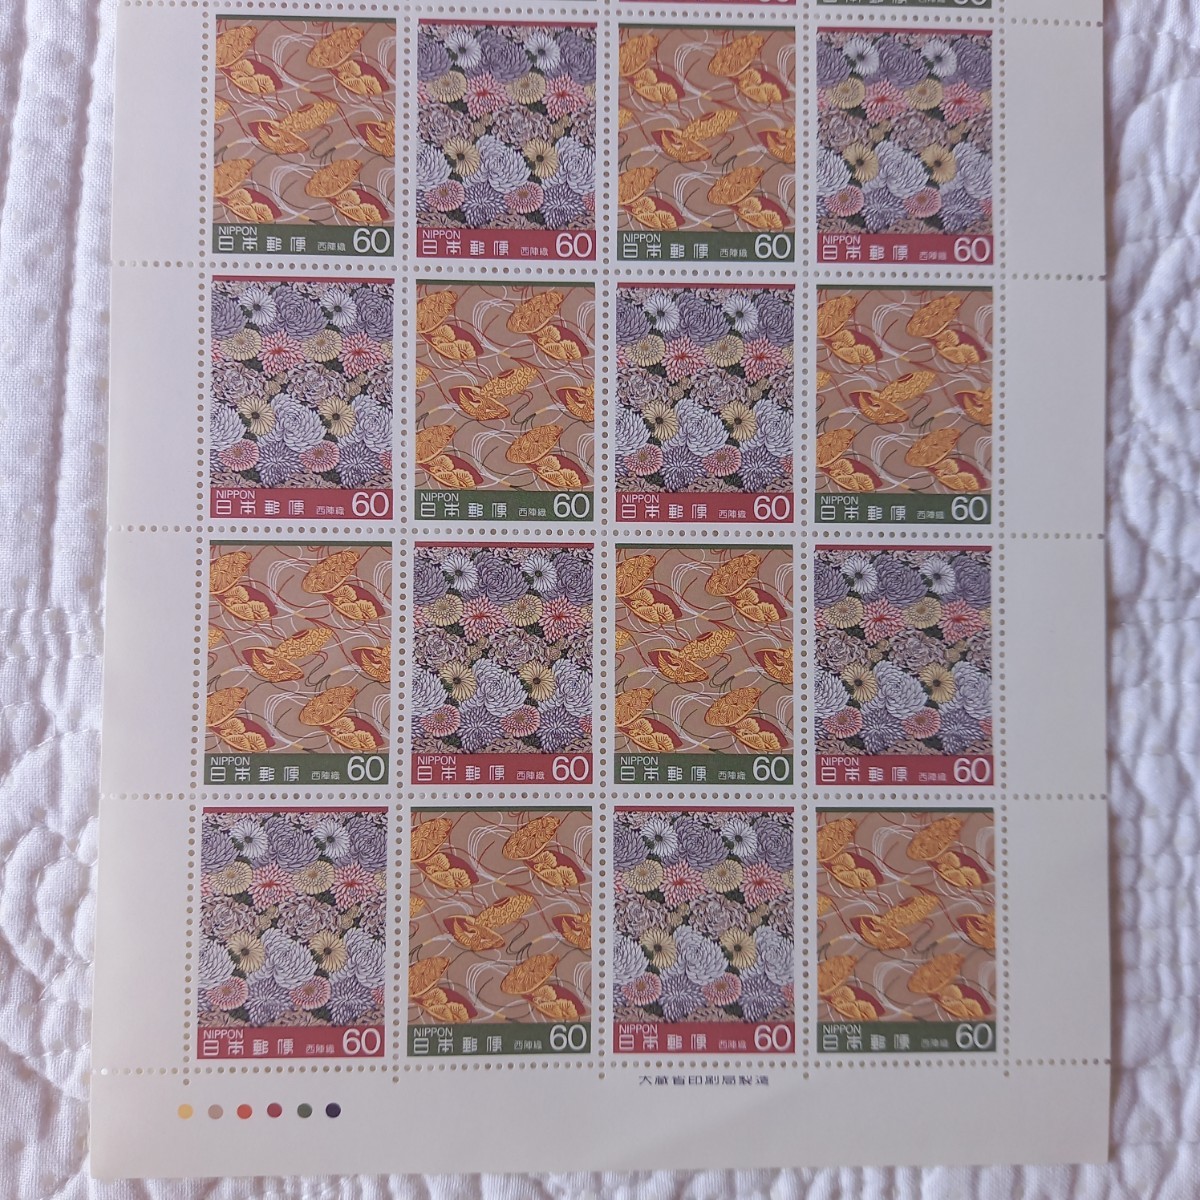 [ traditional craft goods ] stamp seat no. 1 compilation Kutani west . woven unused mail stamp Showa era 